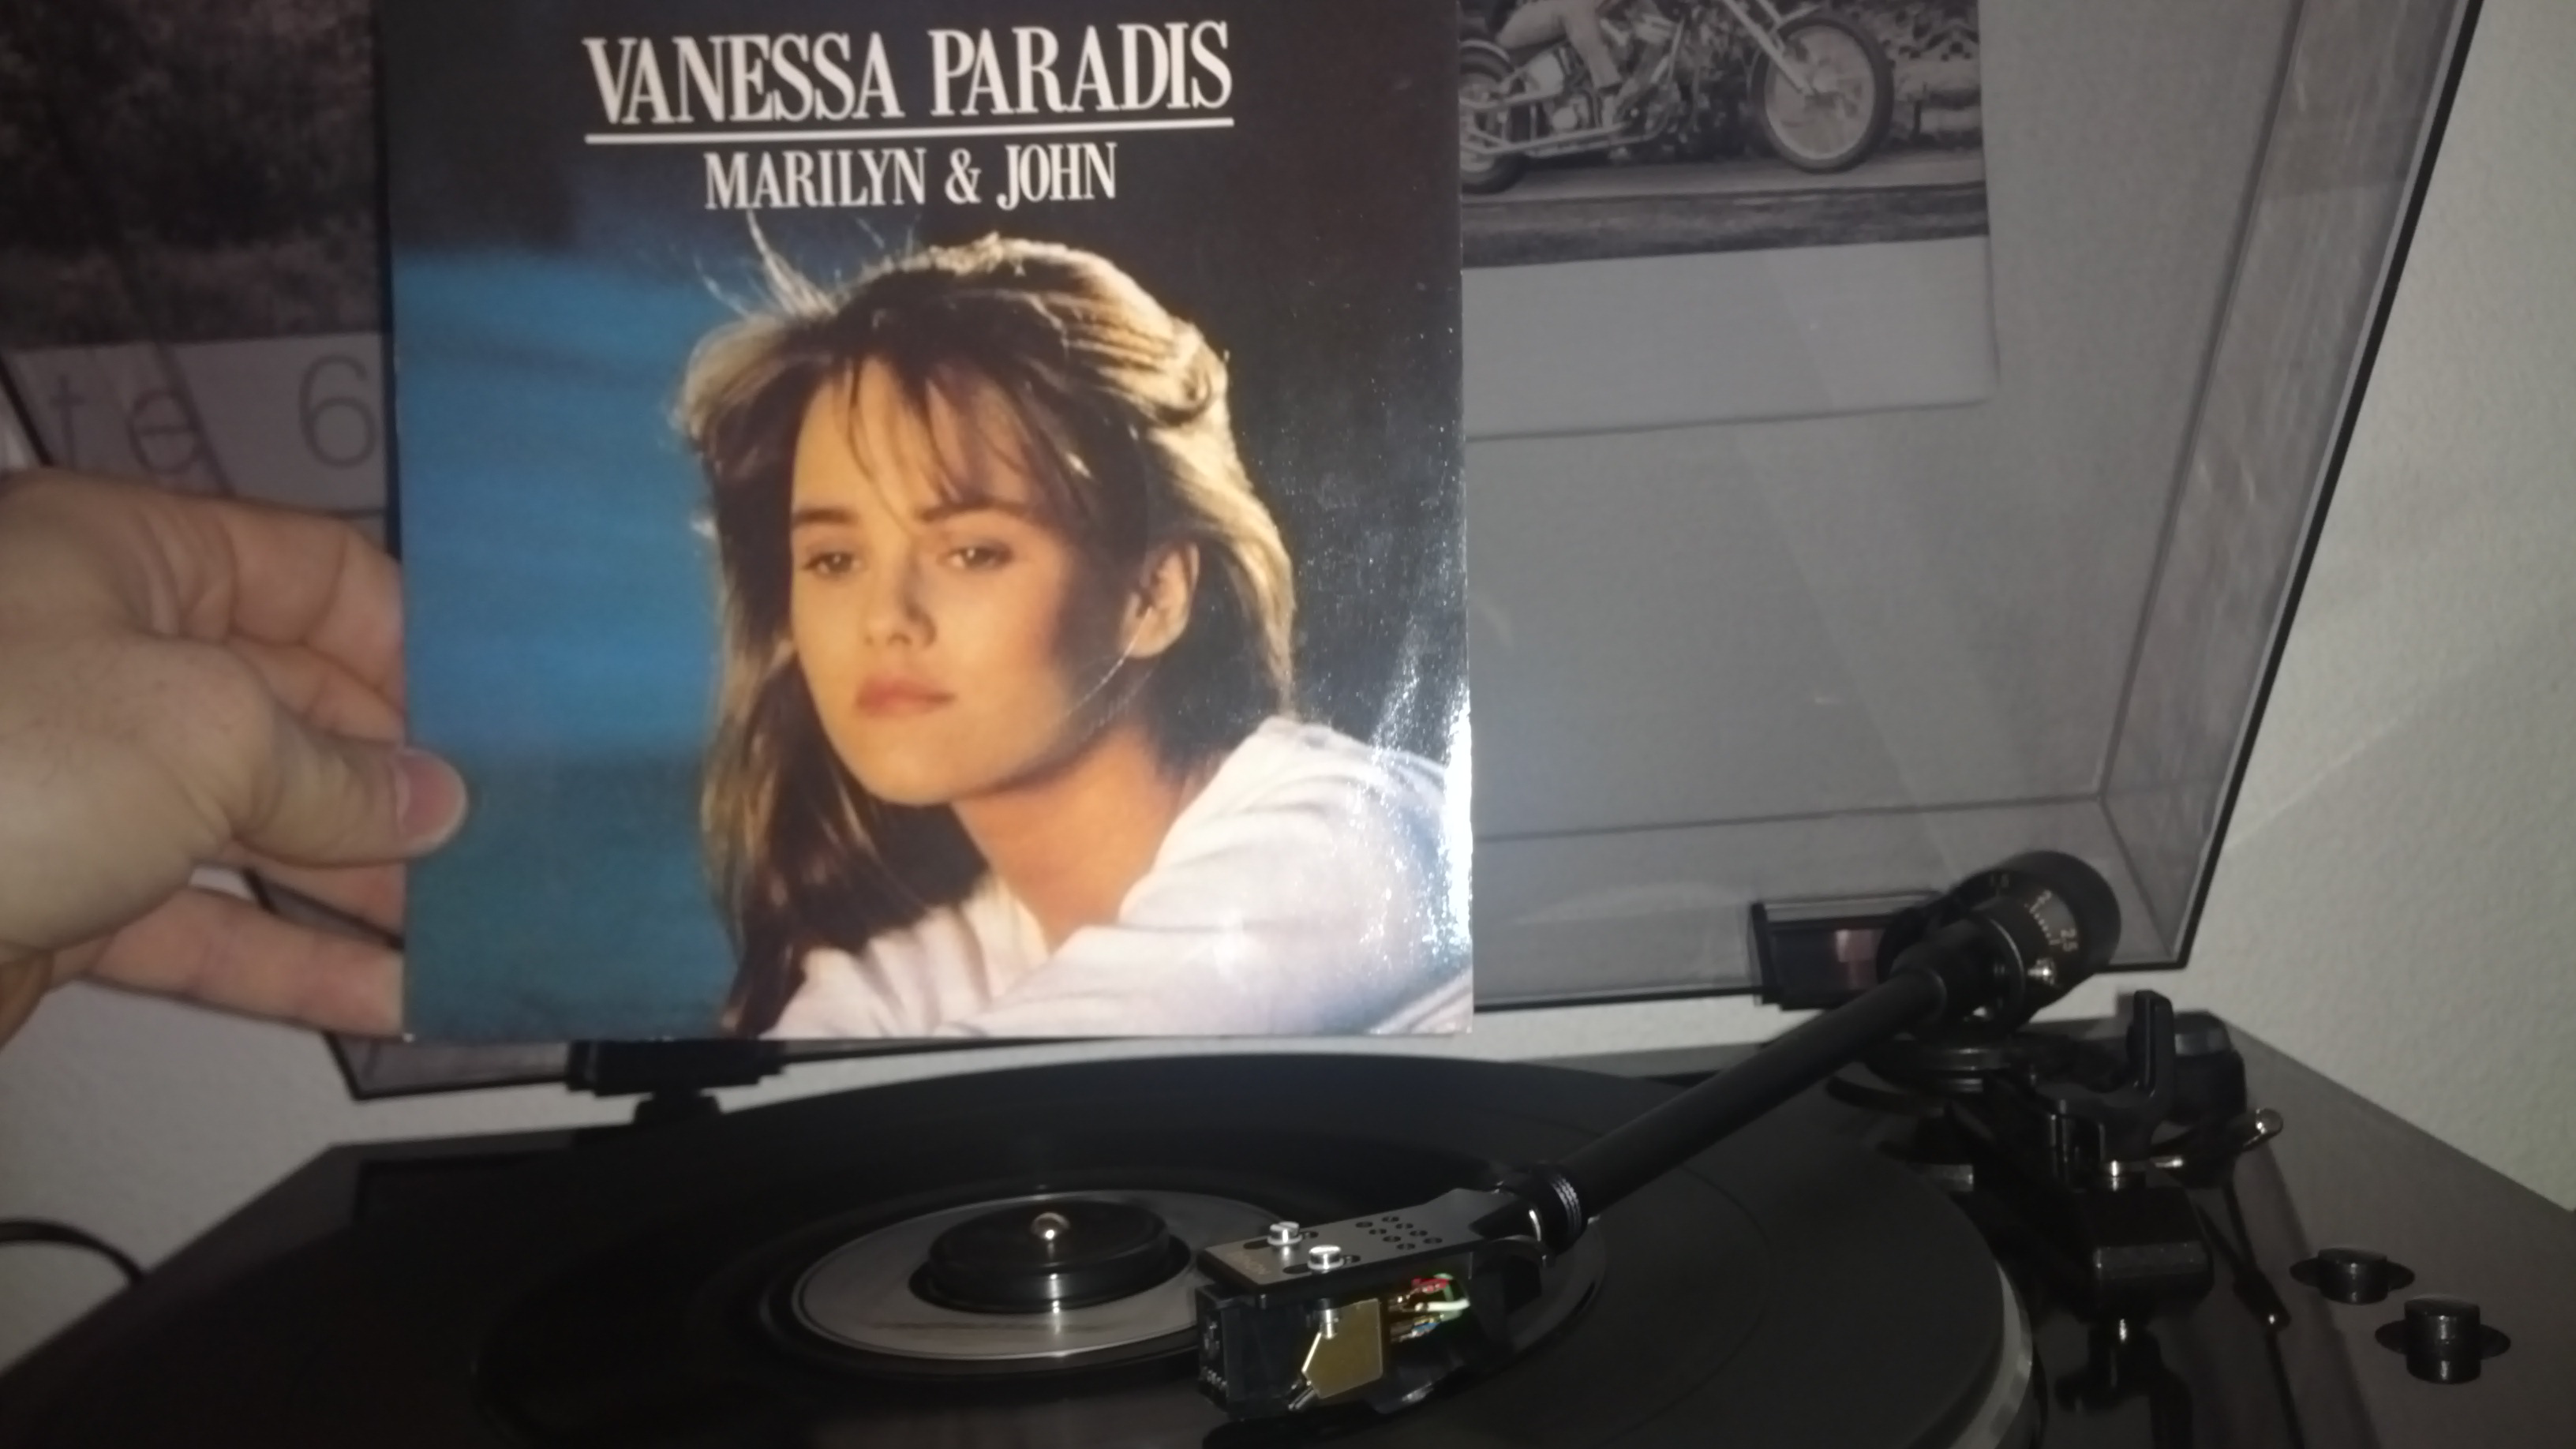 Vanessa Paradis Marilyn et John – Vinyle 45 tours SP 1988